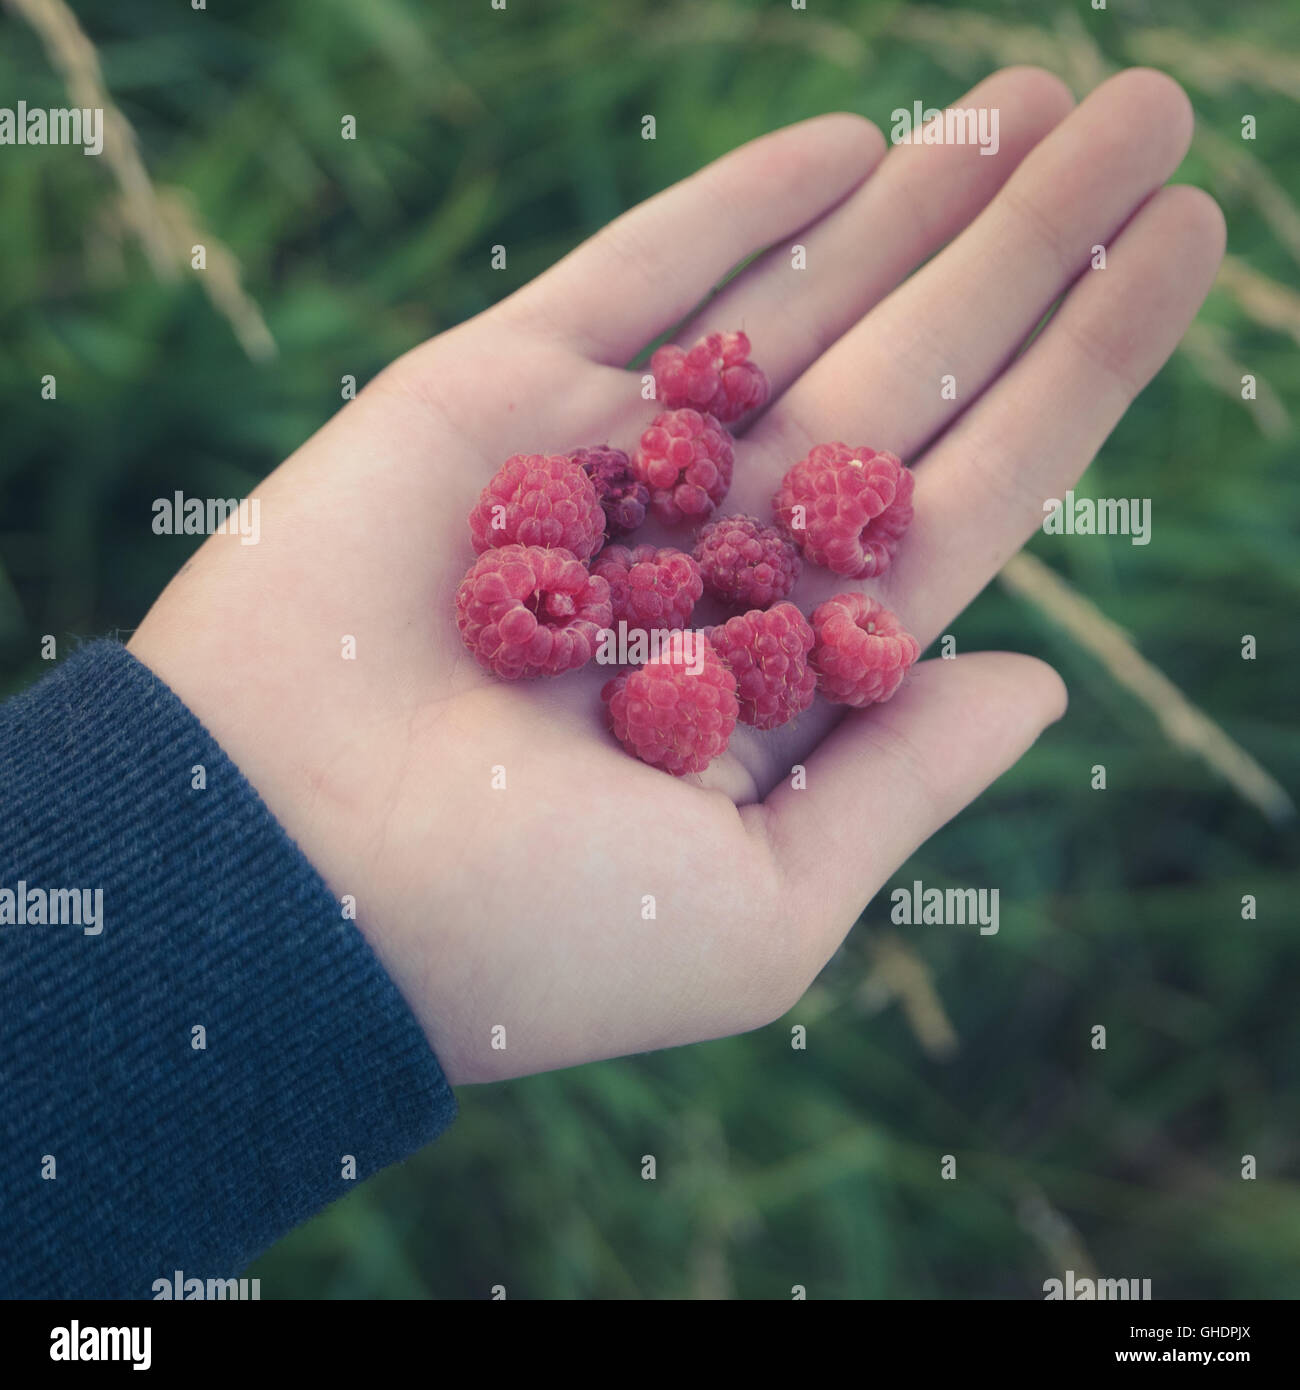 A Child Holding Some Wild Raspberries Stock Photo